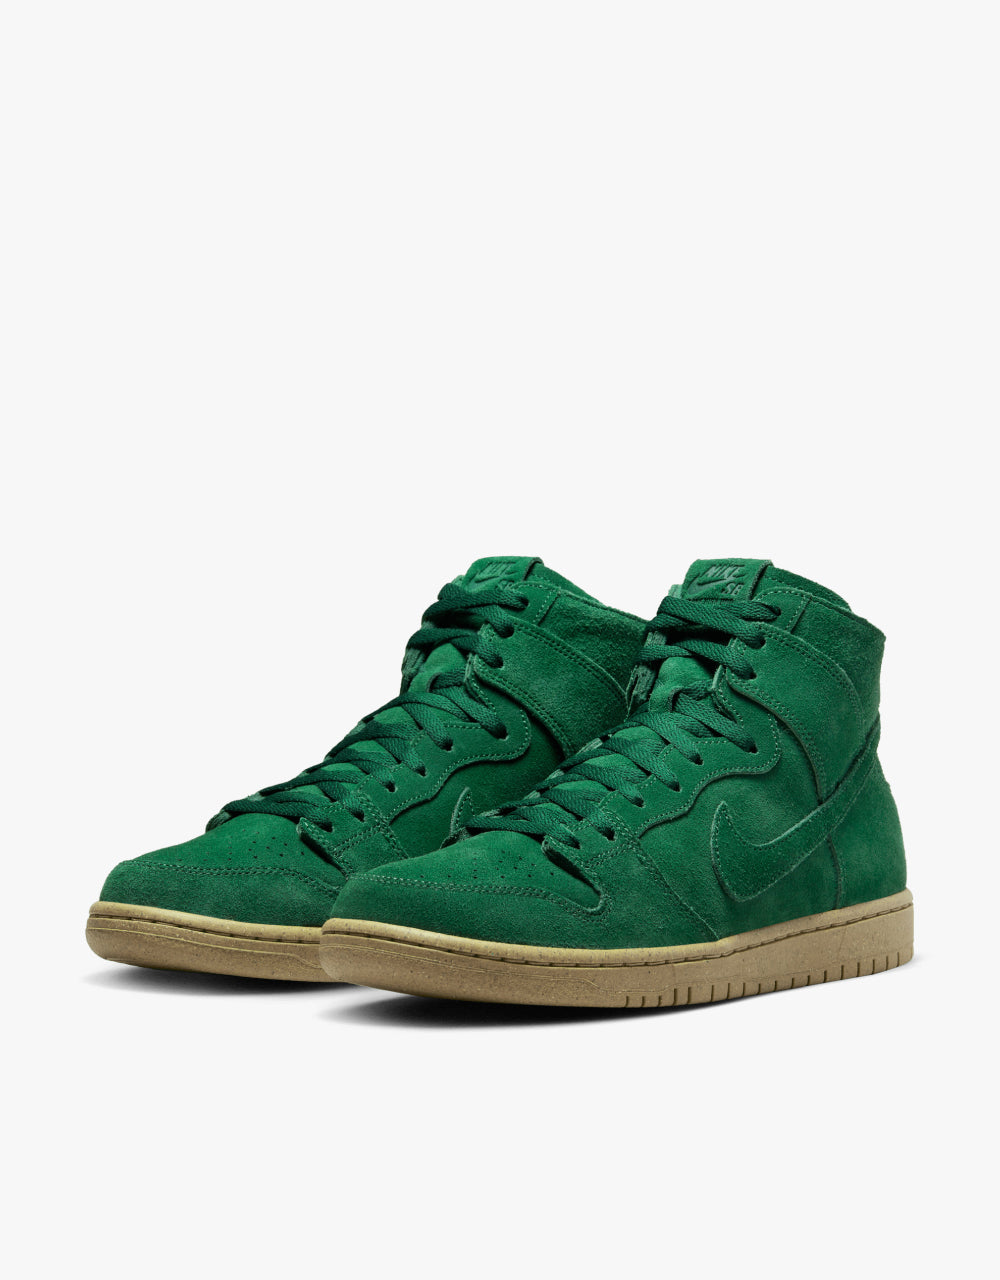 Nike SB 'Decon' Dunk High Pro Skate Shoes - Gorge Green/Gorge Green-Black